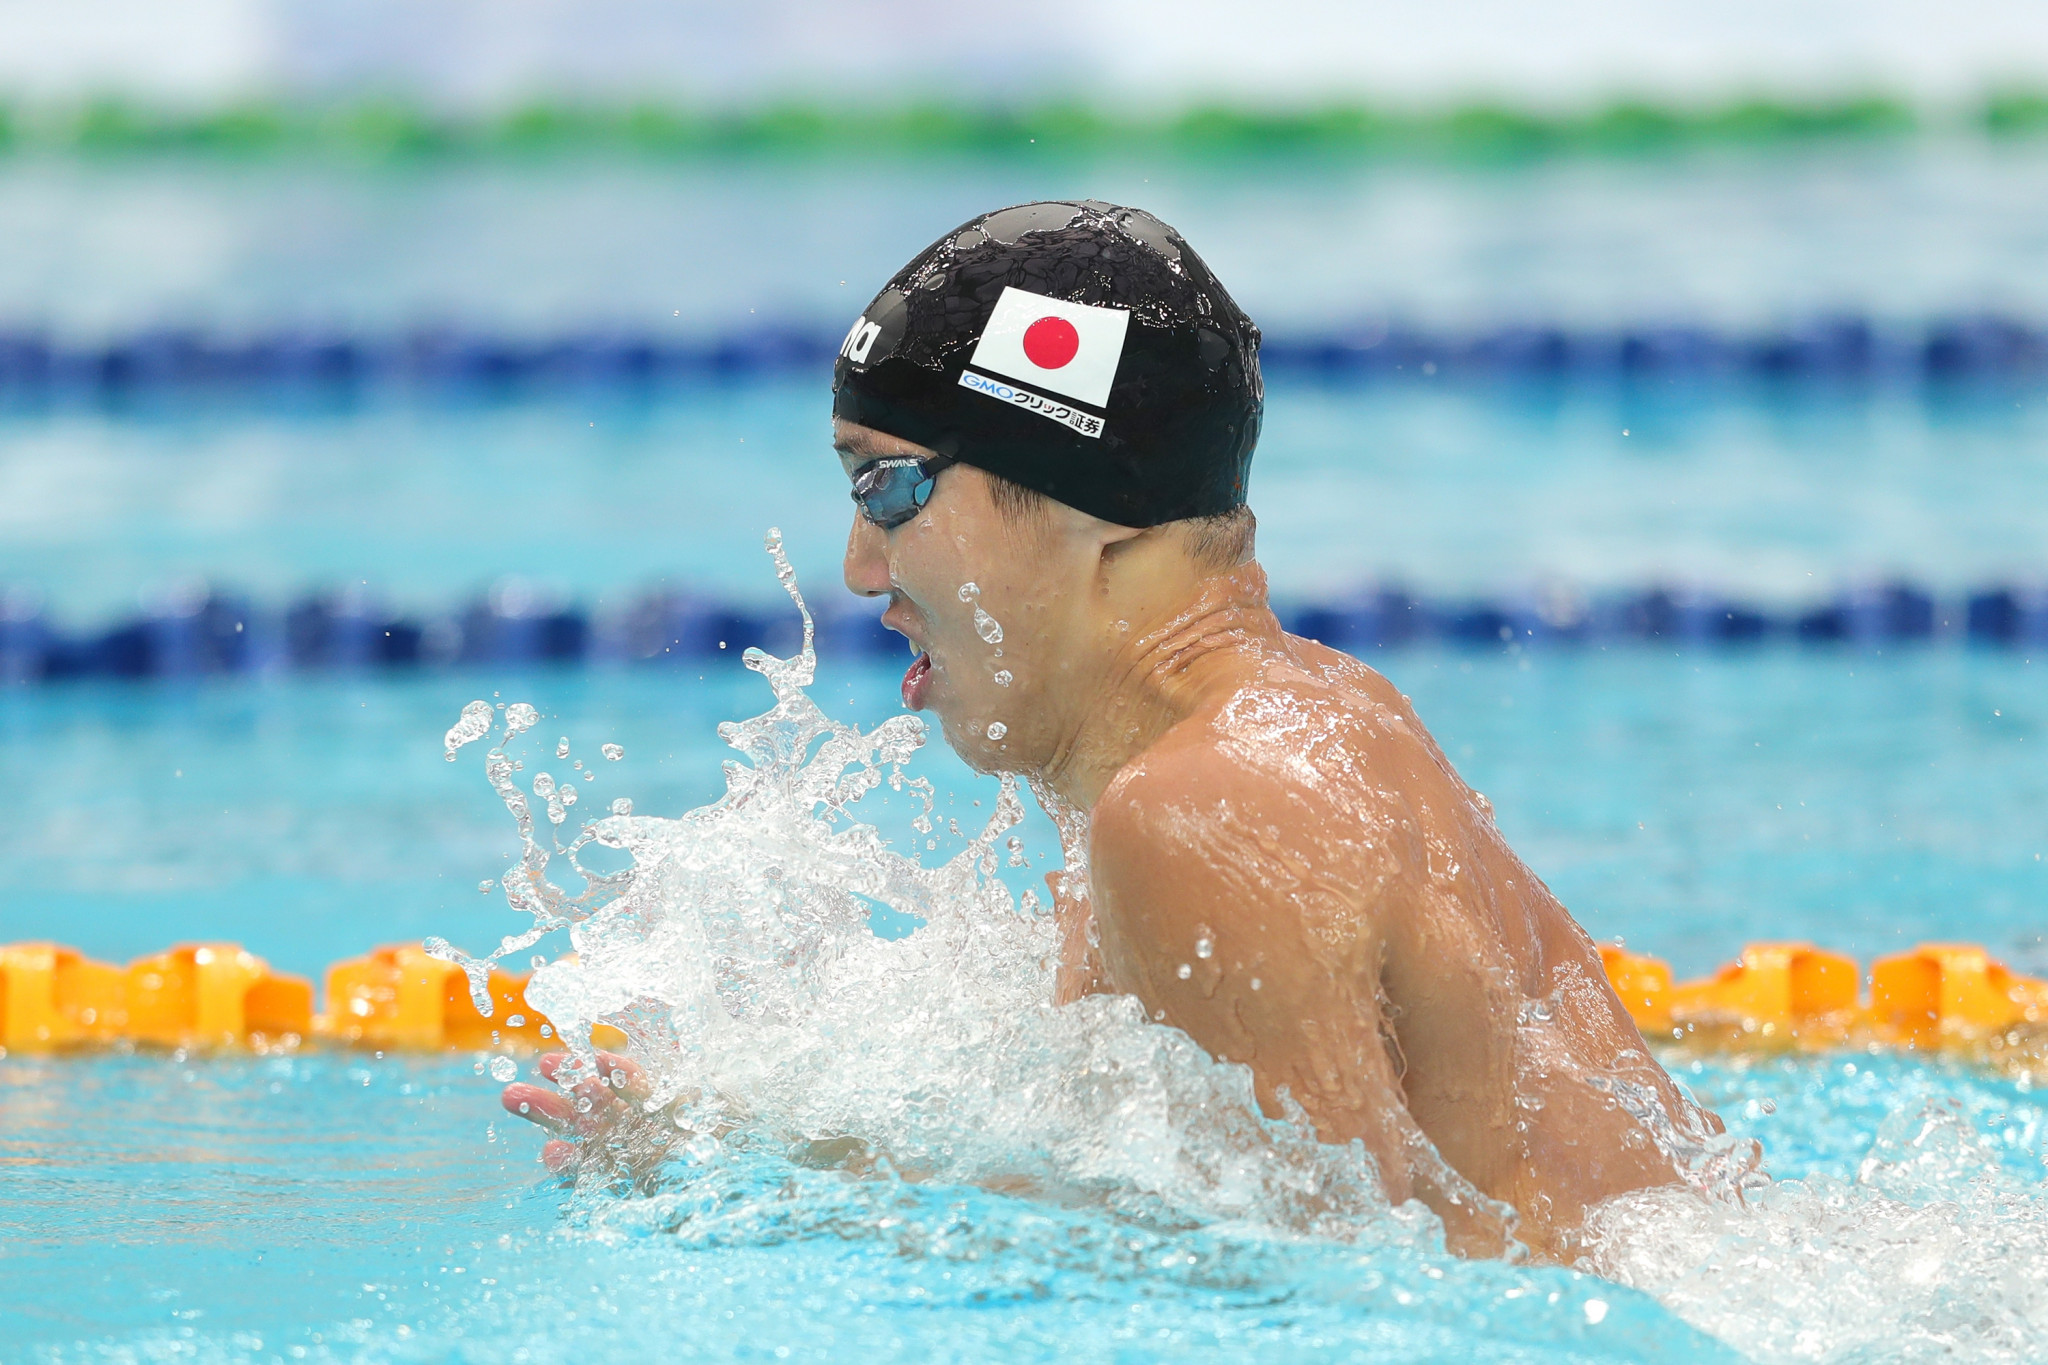 Japanese swimmer Hiromasa Fujimori to miss Tokyo 2020 as CAS upholds doping ban